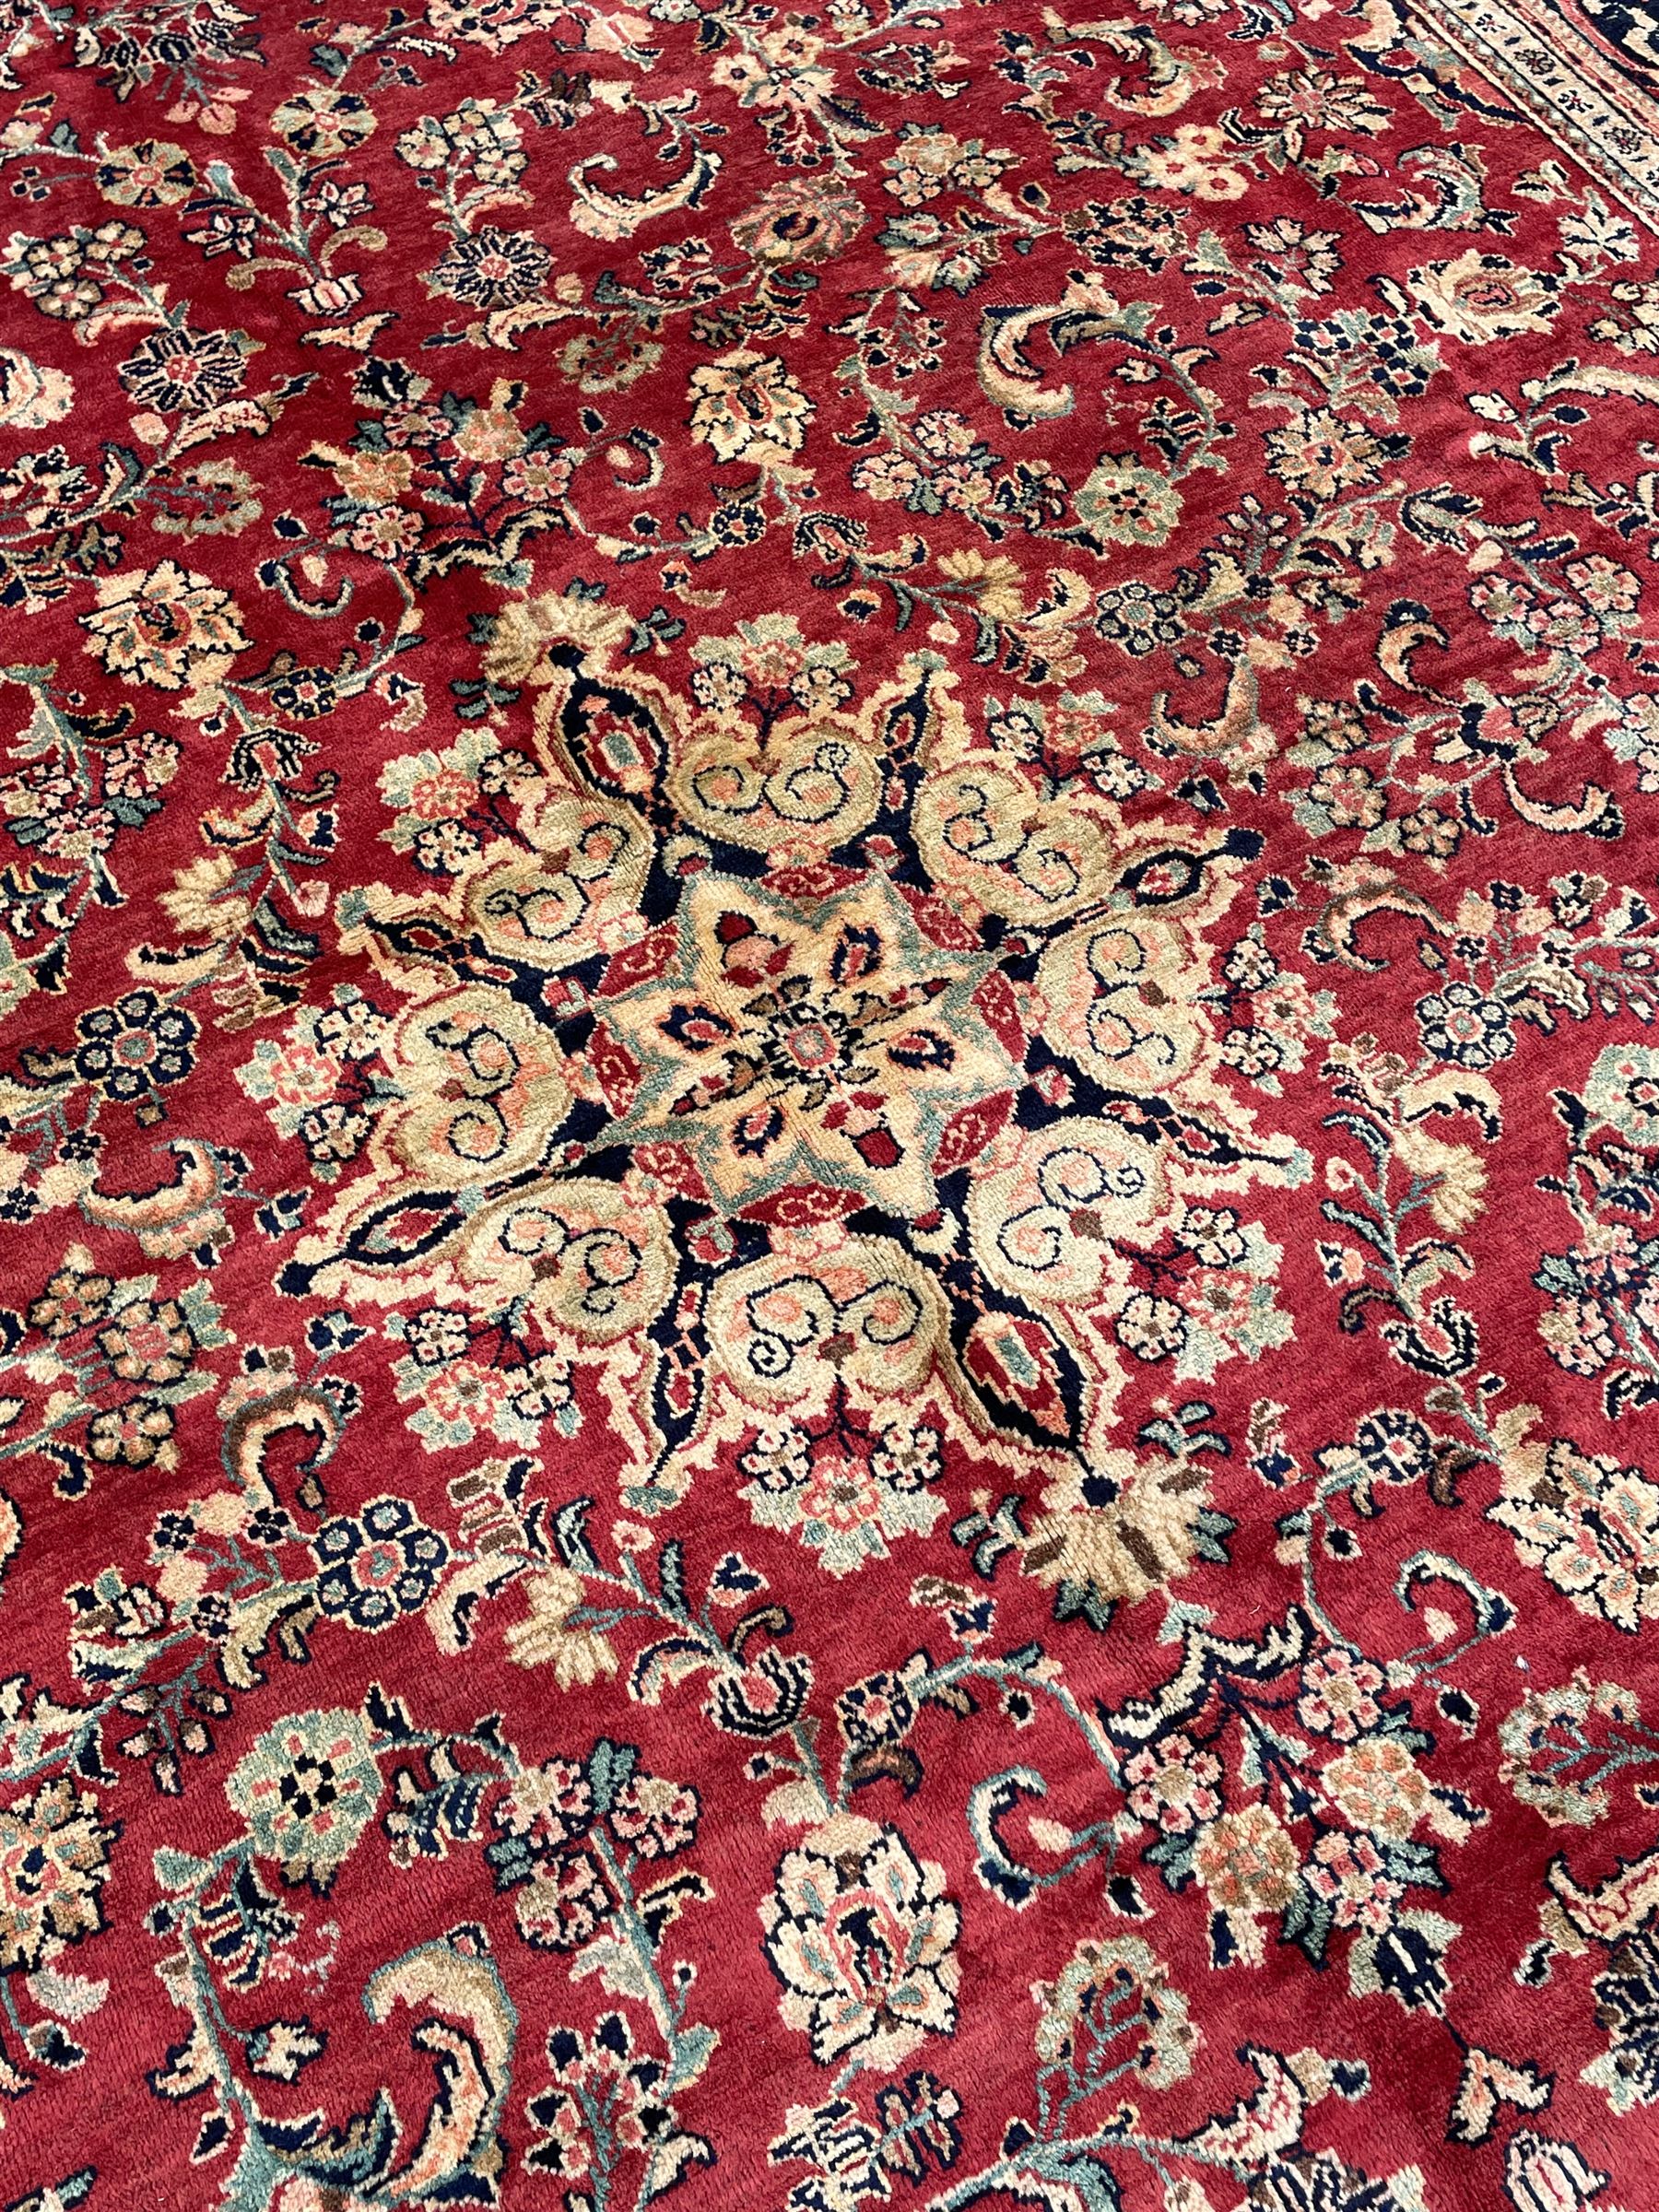 Persian Mahal red ground carpet - Image 9 of 9